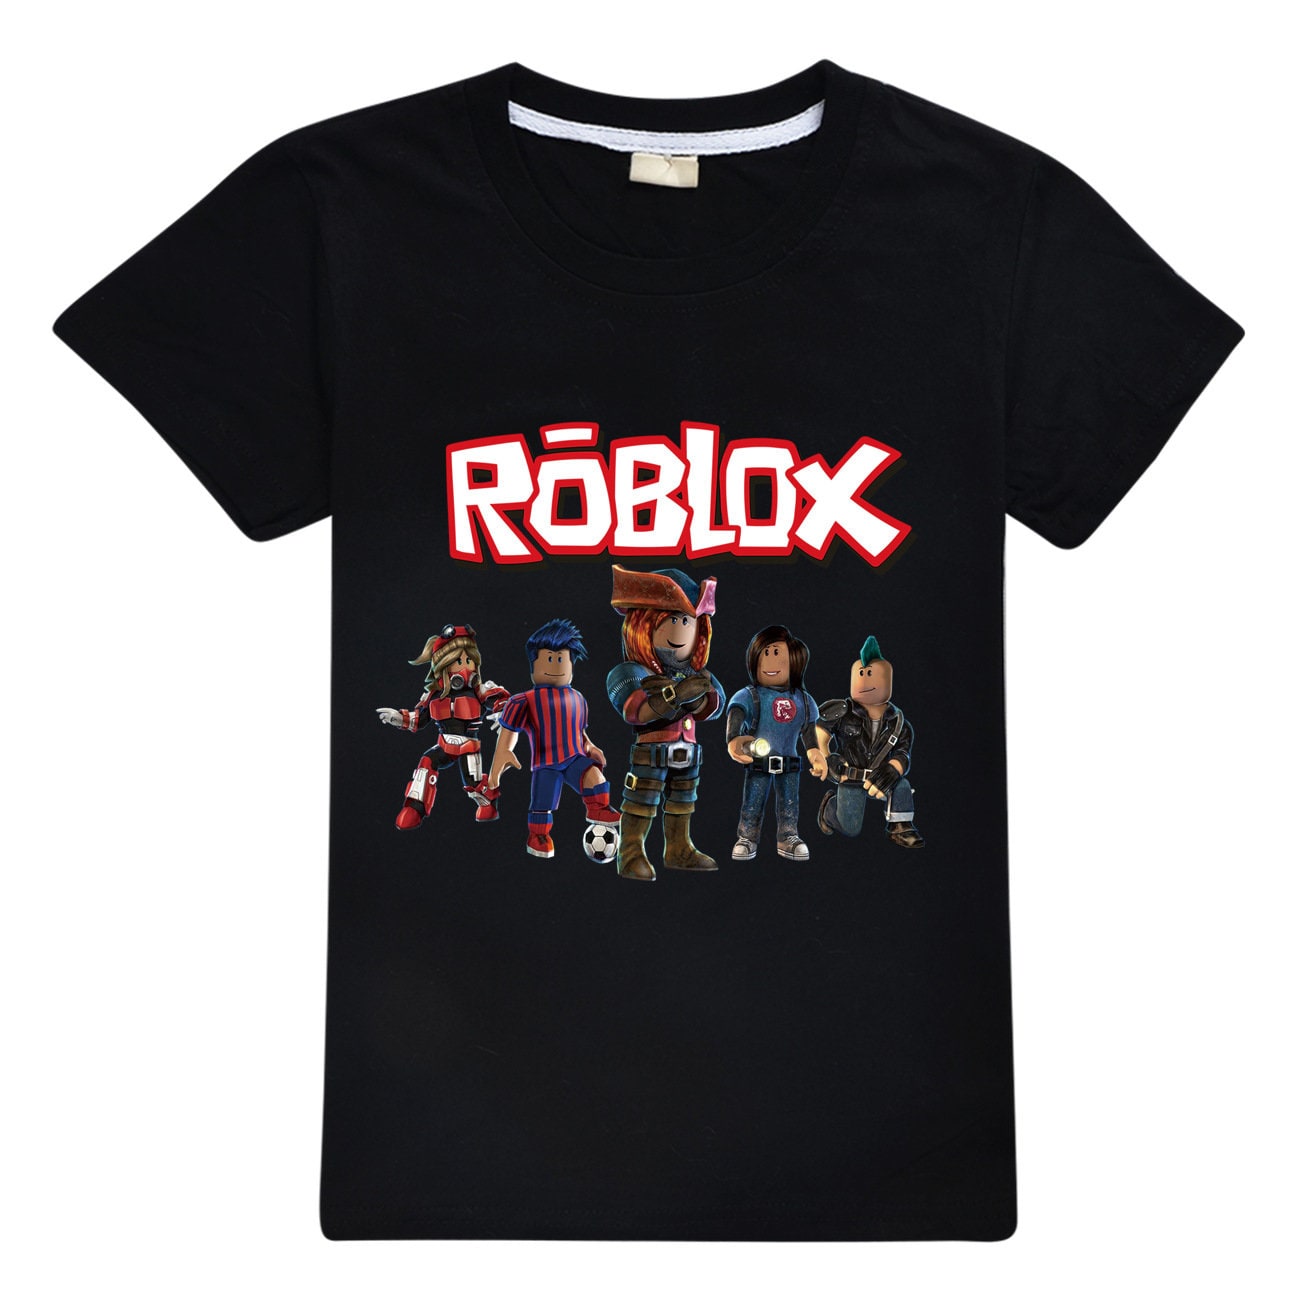 Roblox Nike T-shirt Em 2021 1AD  Roblox t shirts, Roblox shirt, Roblox t- shirt